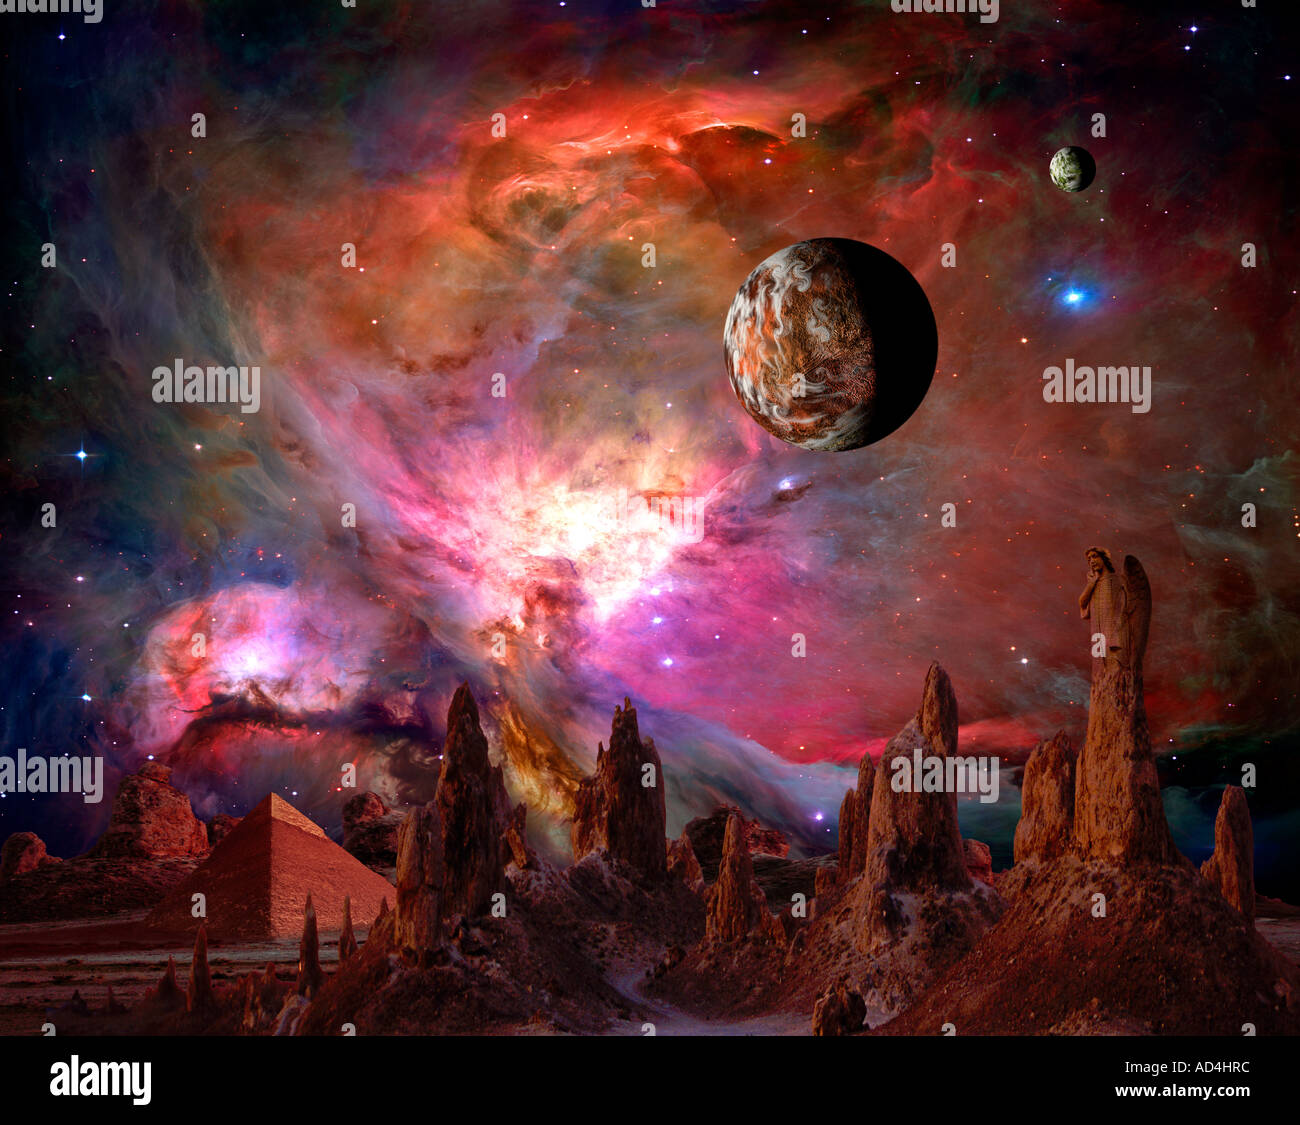 Extra-solar planet (Science Fiction scene) Stock Photo